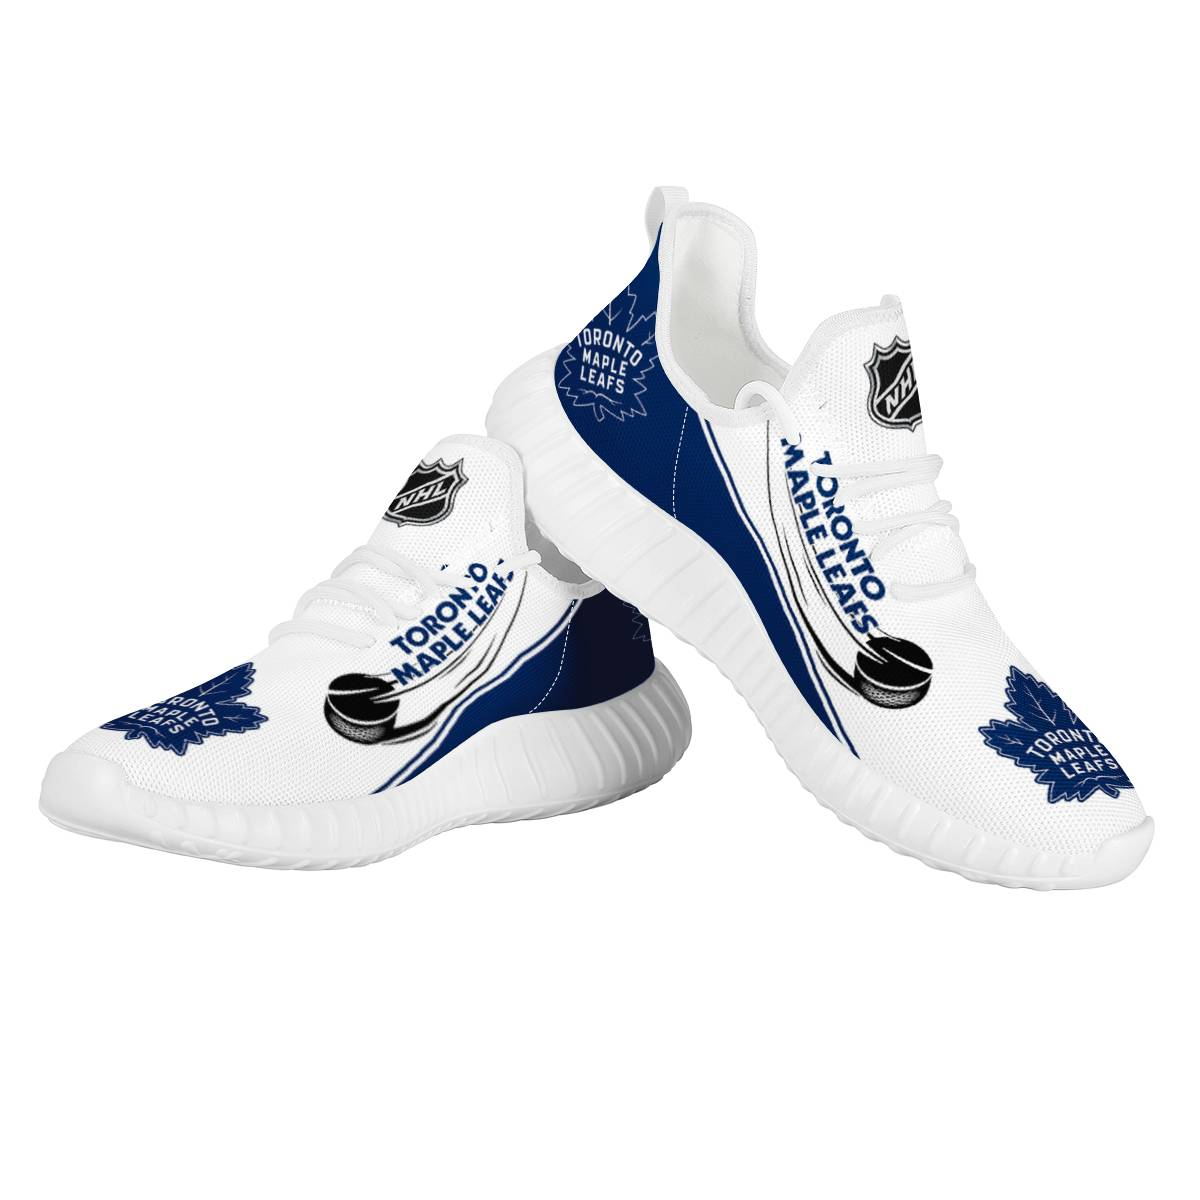 Women's NHL Toronto Maple Leafs Mesh Knit Sneakers/Shoes 001